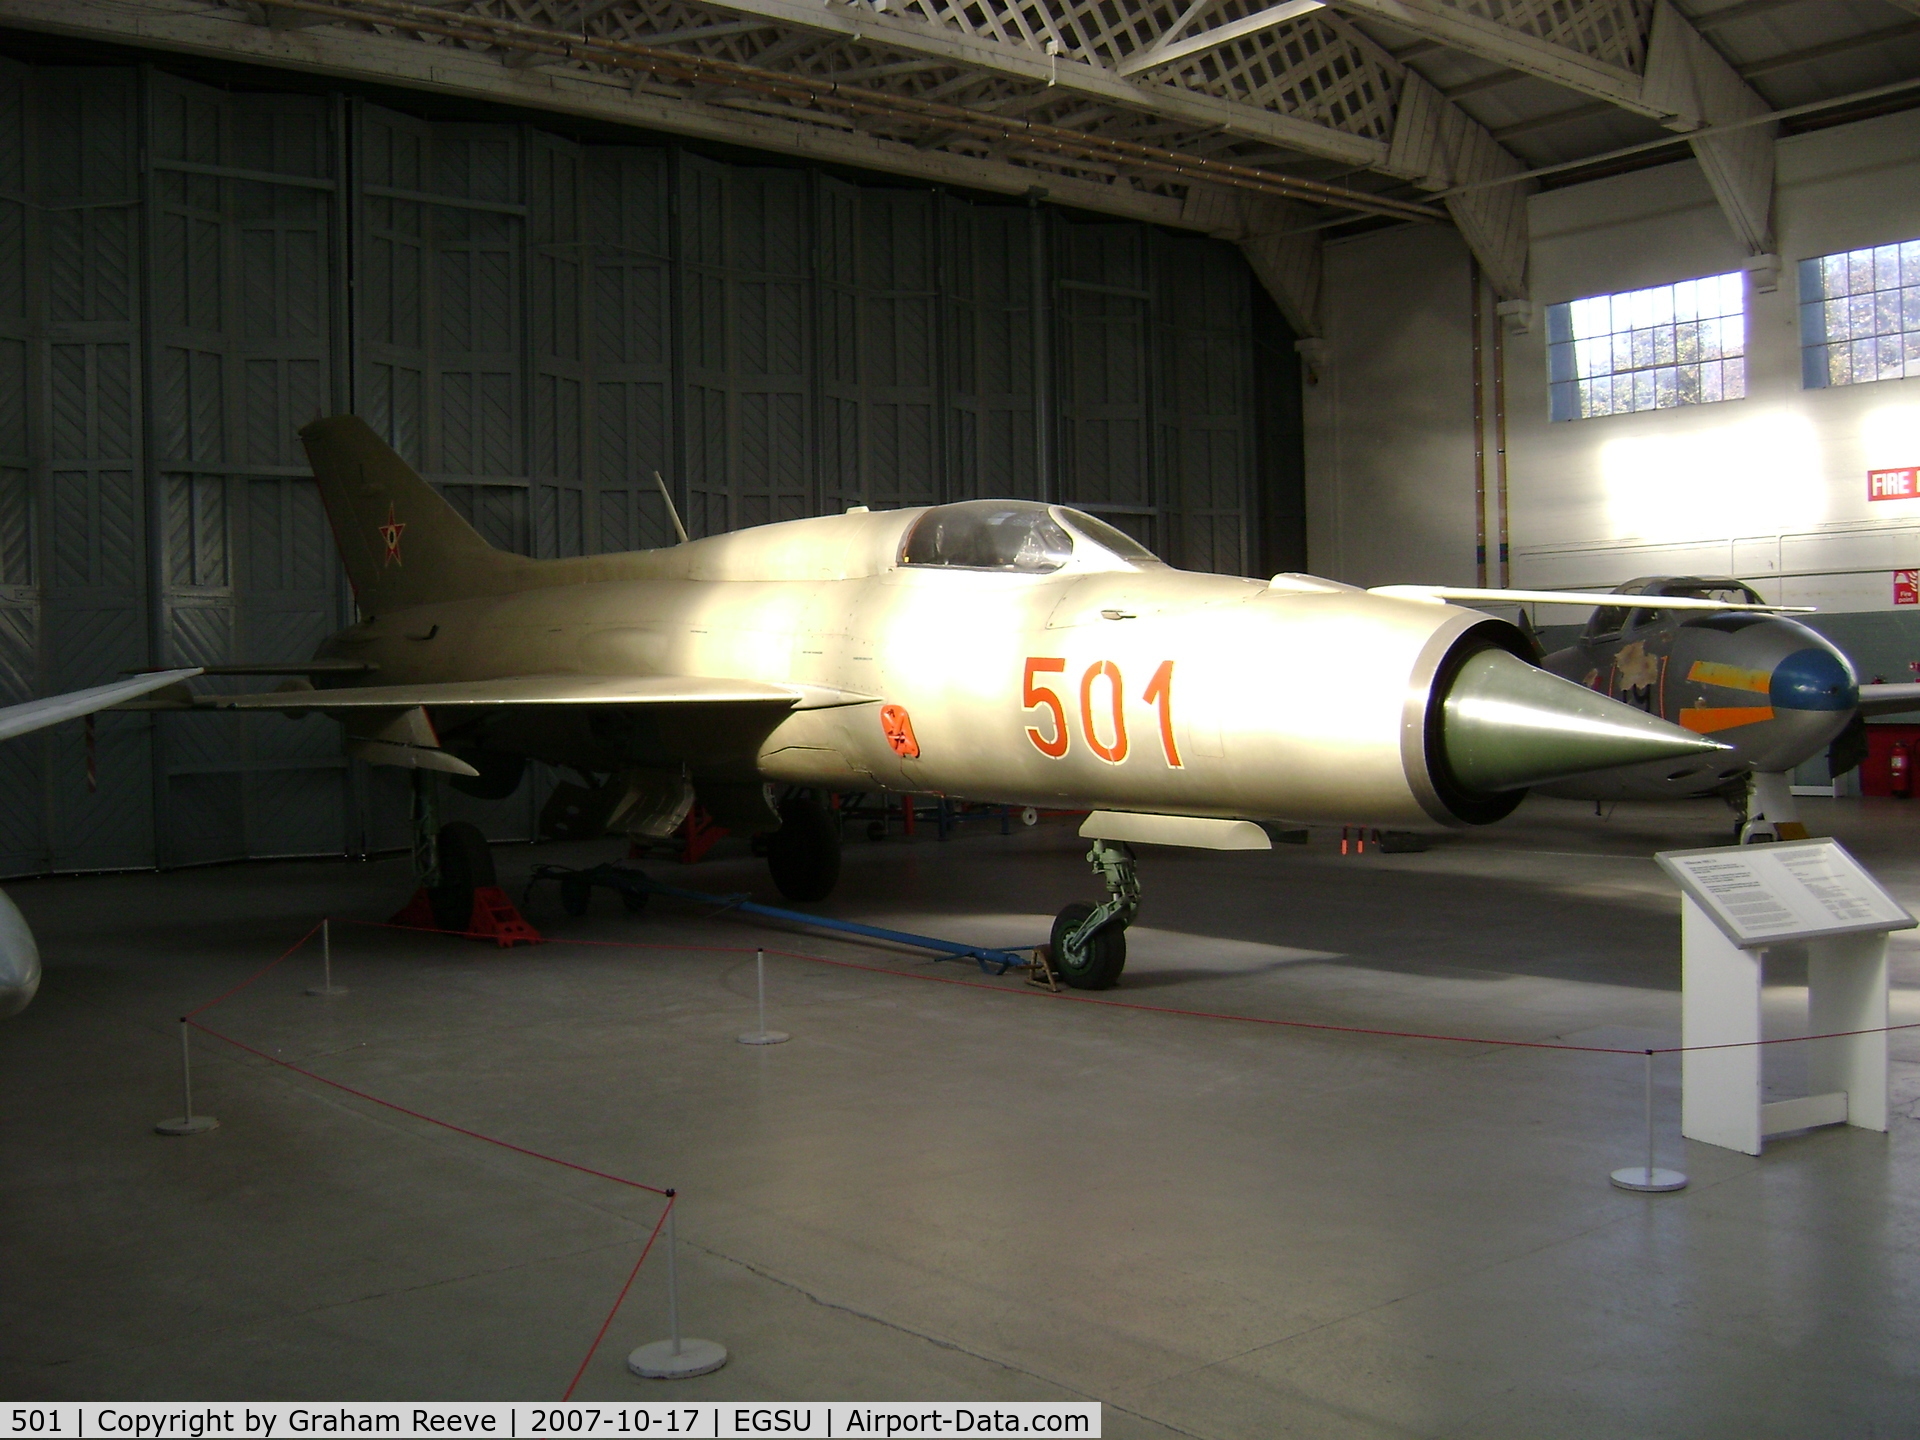 501, 1964 Mikoyan-Gurevich MiG-21PF C/N 760501, 1964 Mikoyan Gurevich Mig-21PF, Serial number 760501.